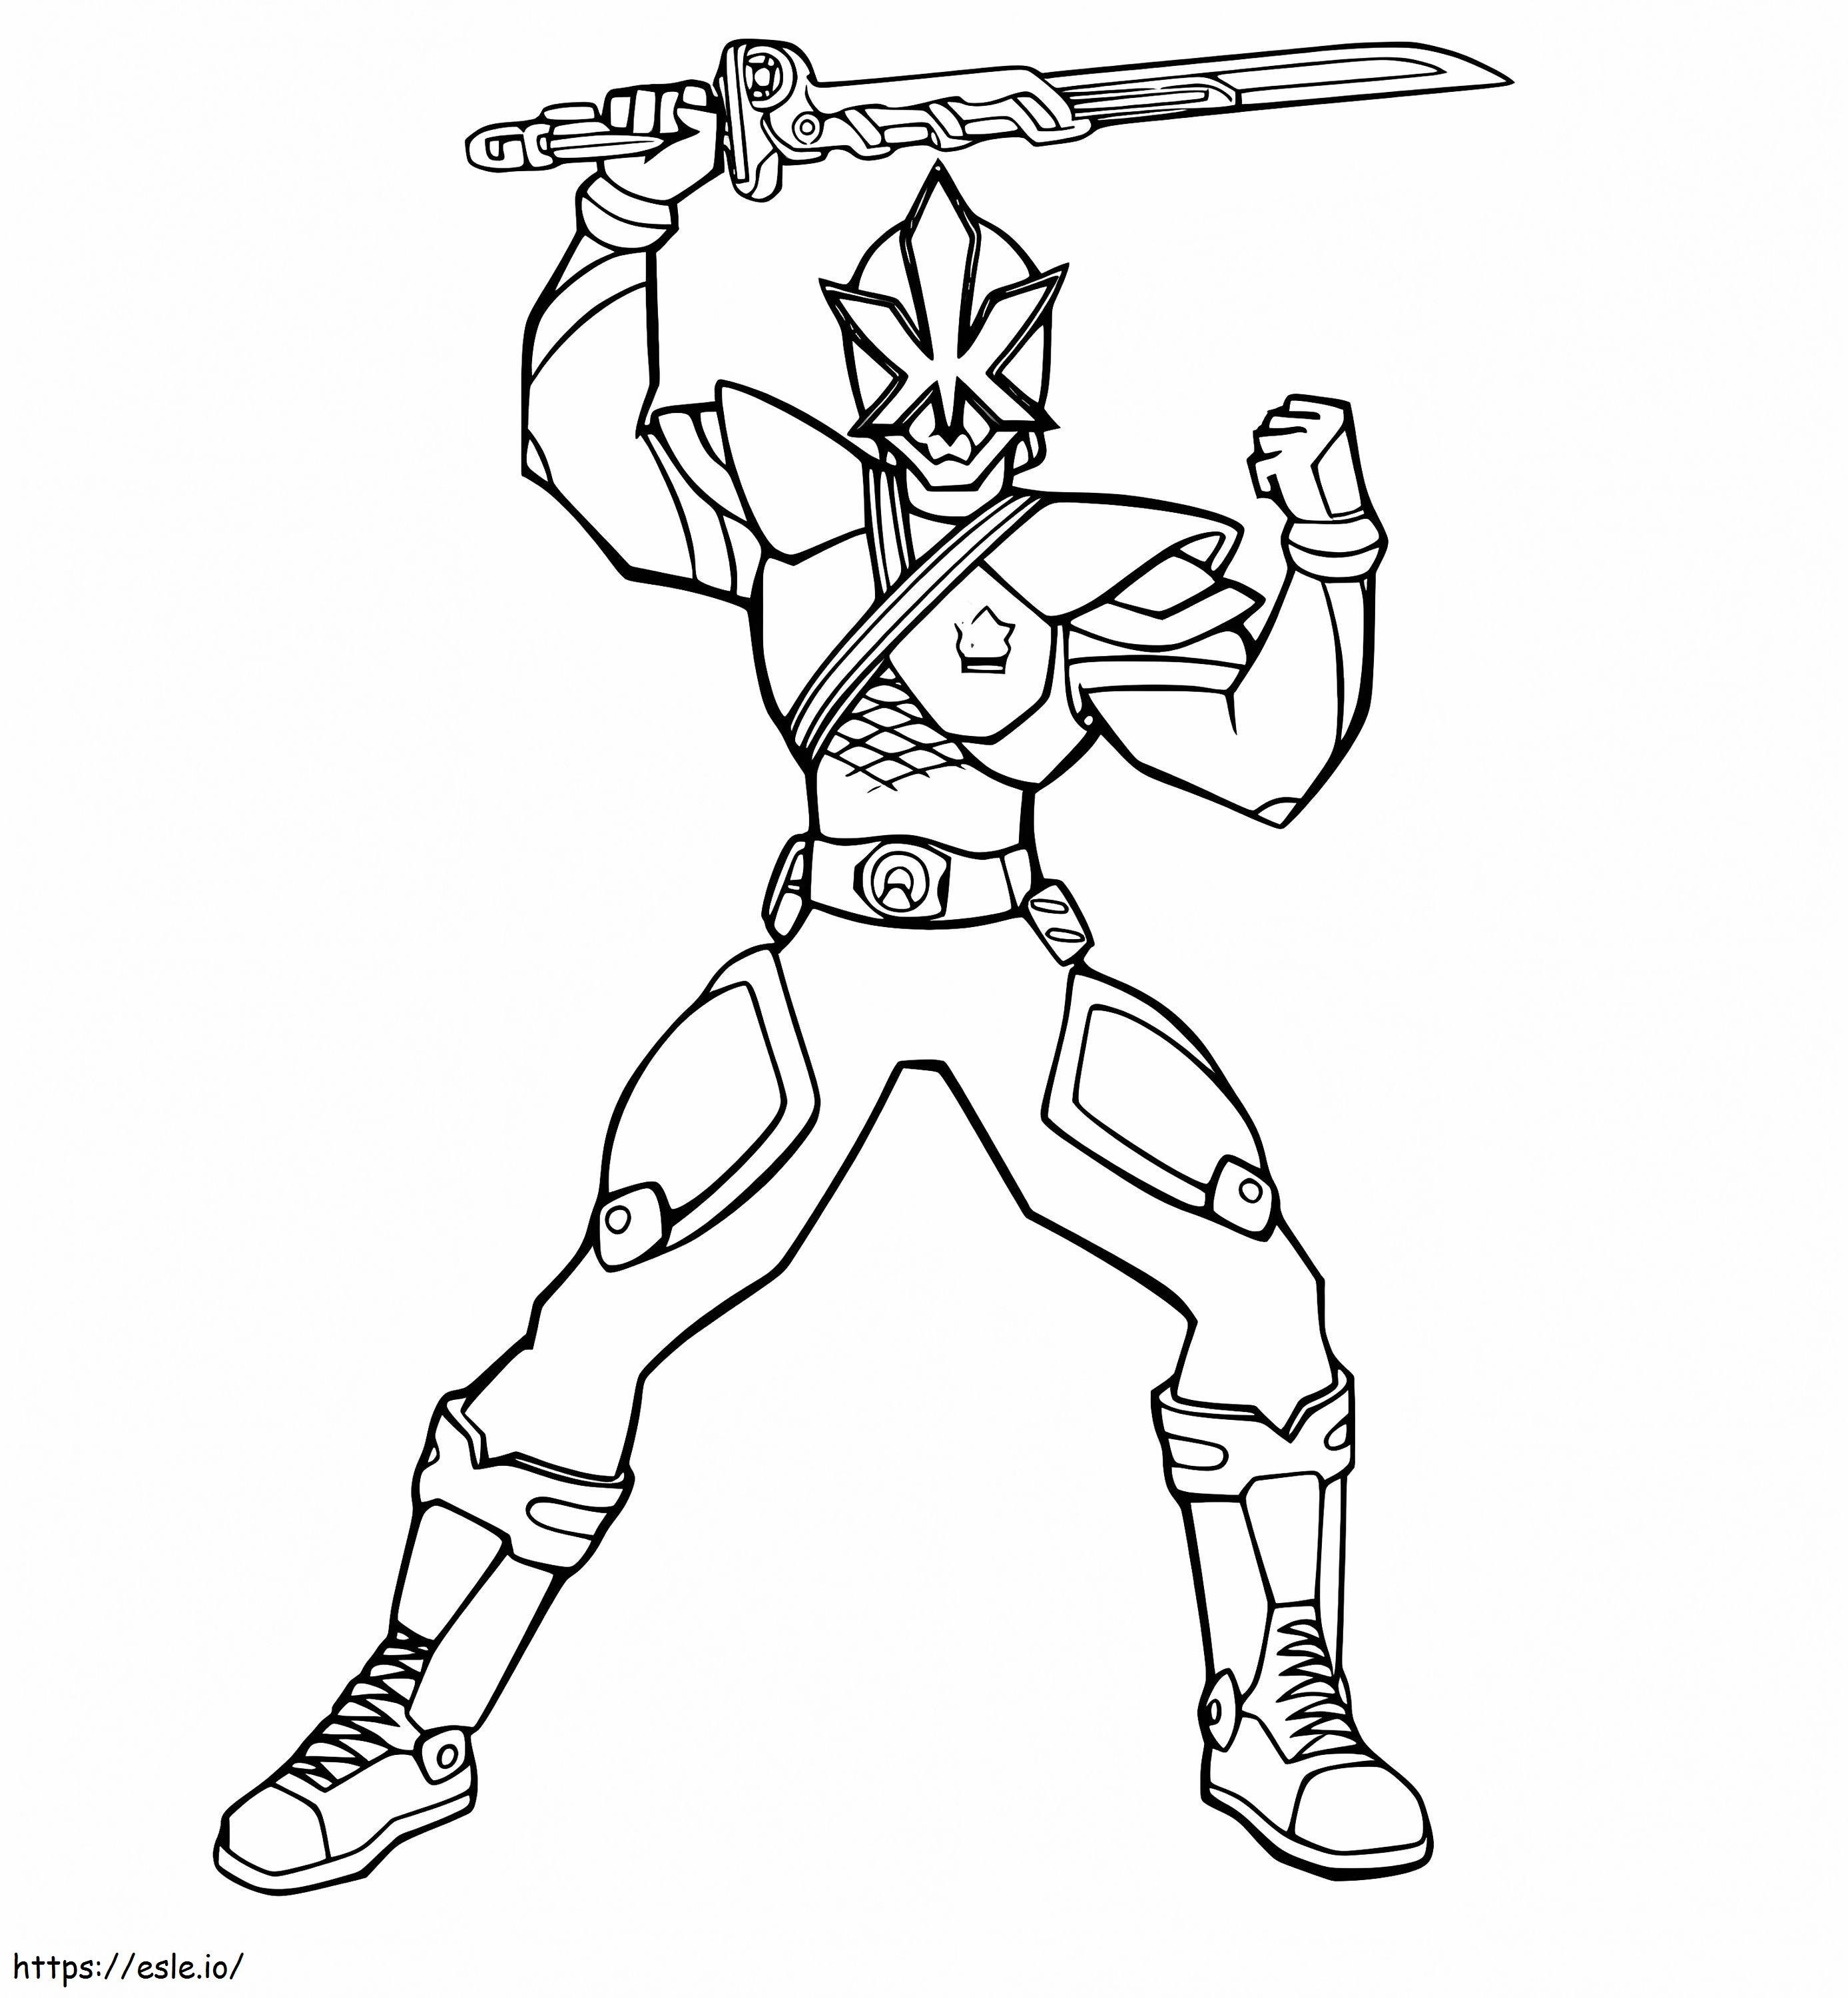 Kevin Biru Samurai Ranger Gambar Mewarnai